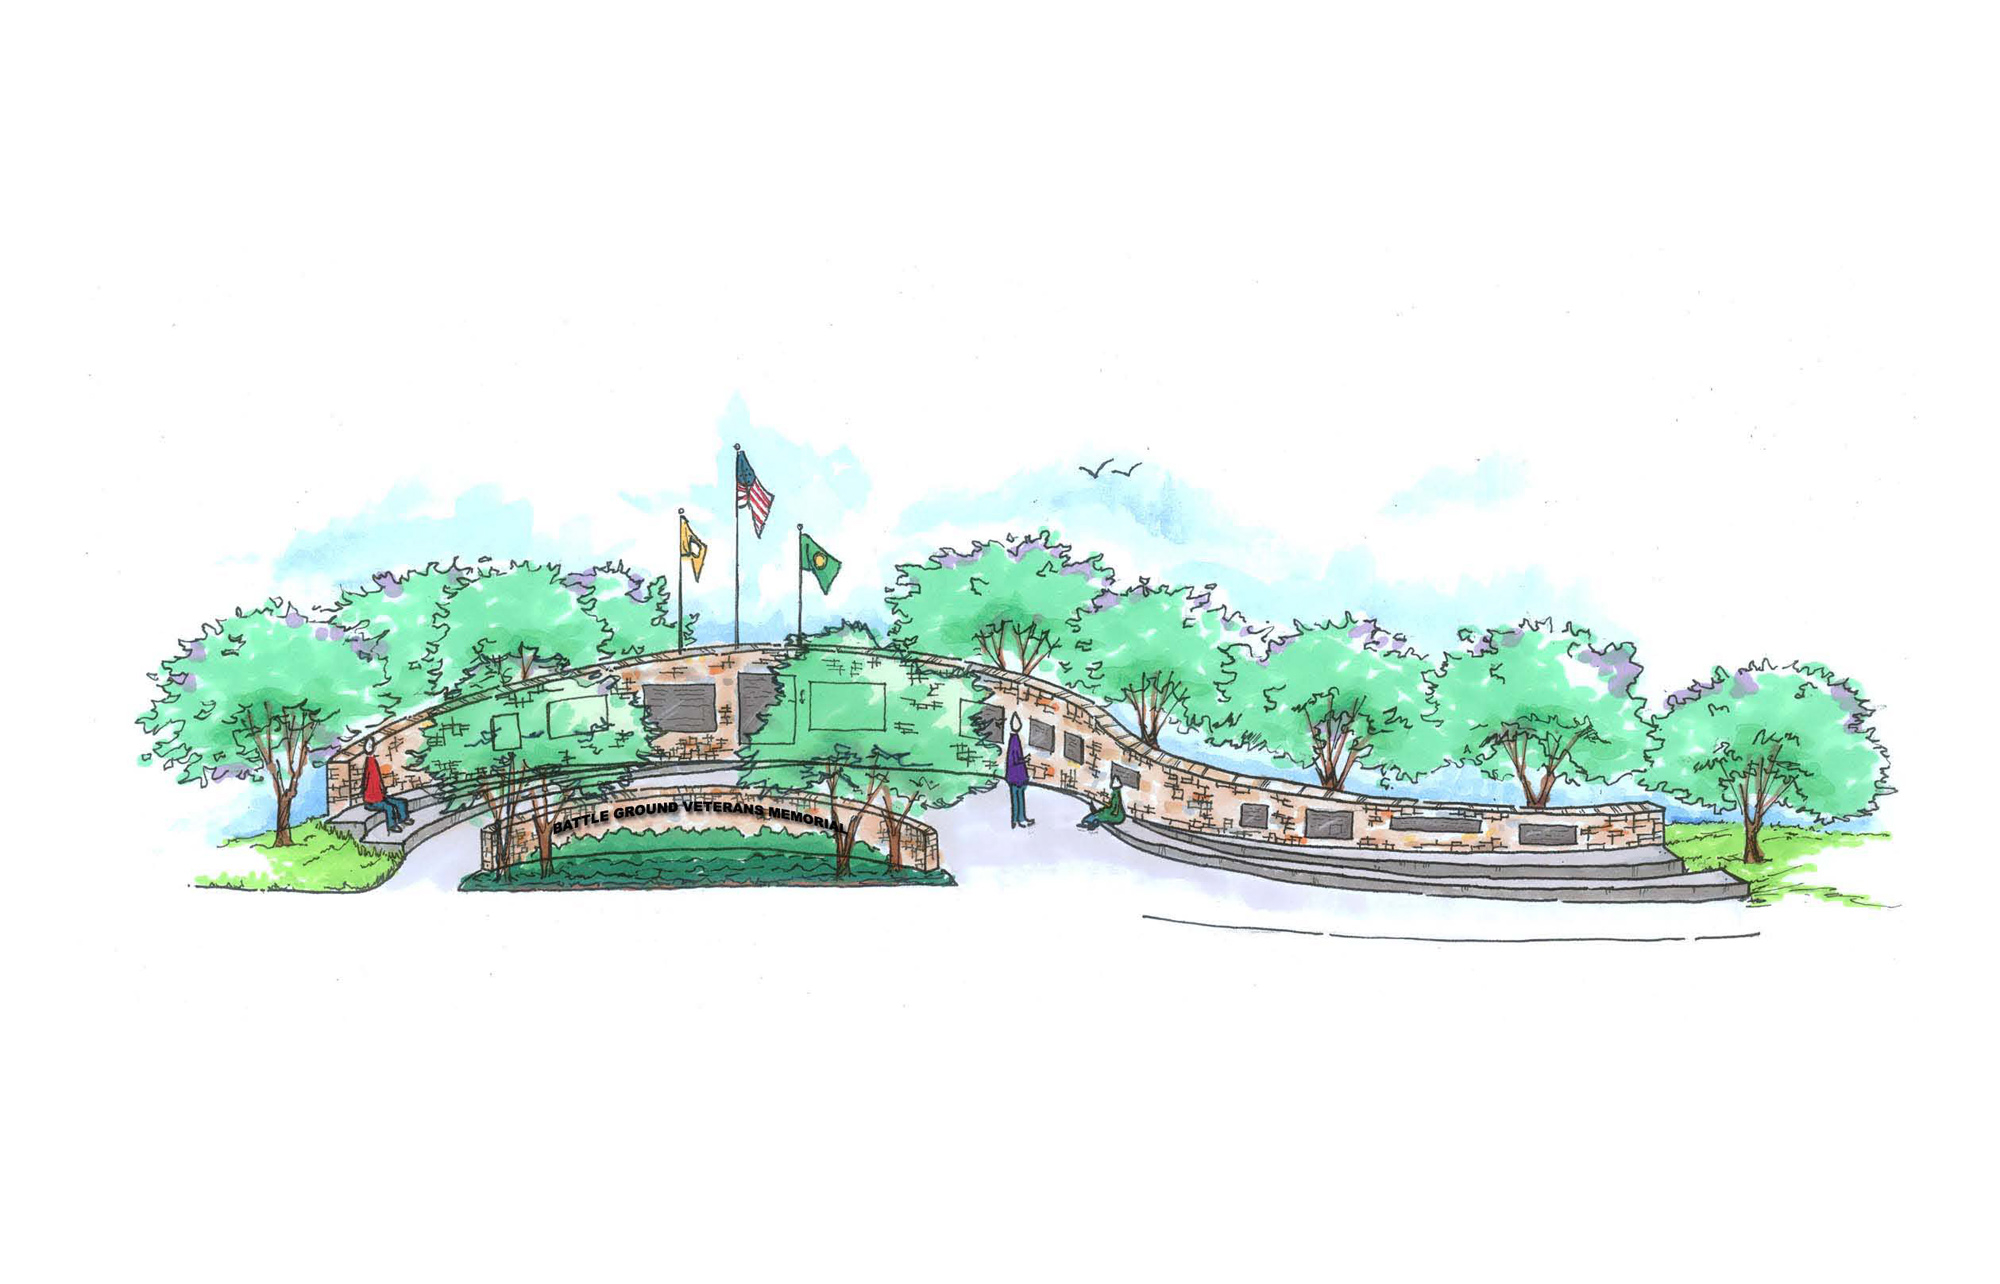 An artist's depiction of the Veterans Memorial planned for Battle Ground's Kiwanis Park.